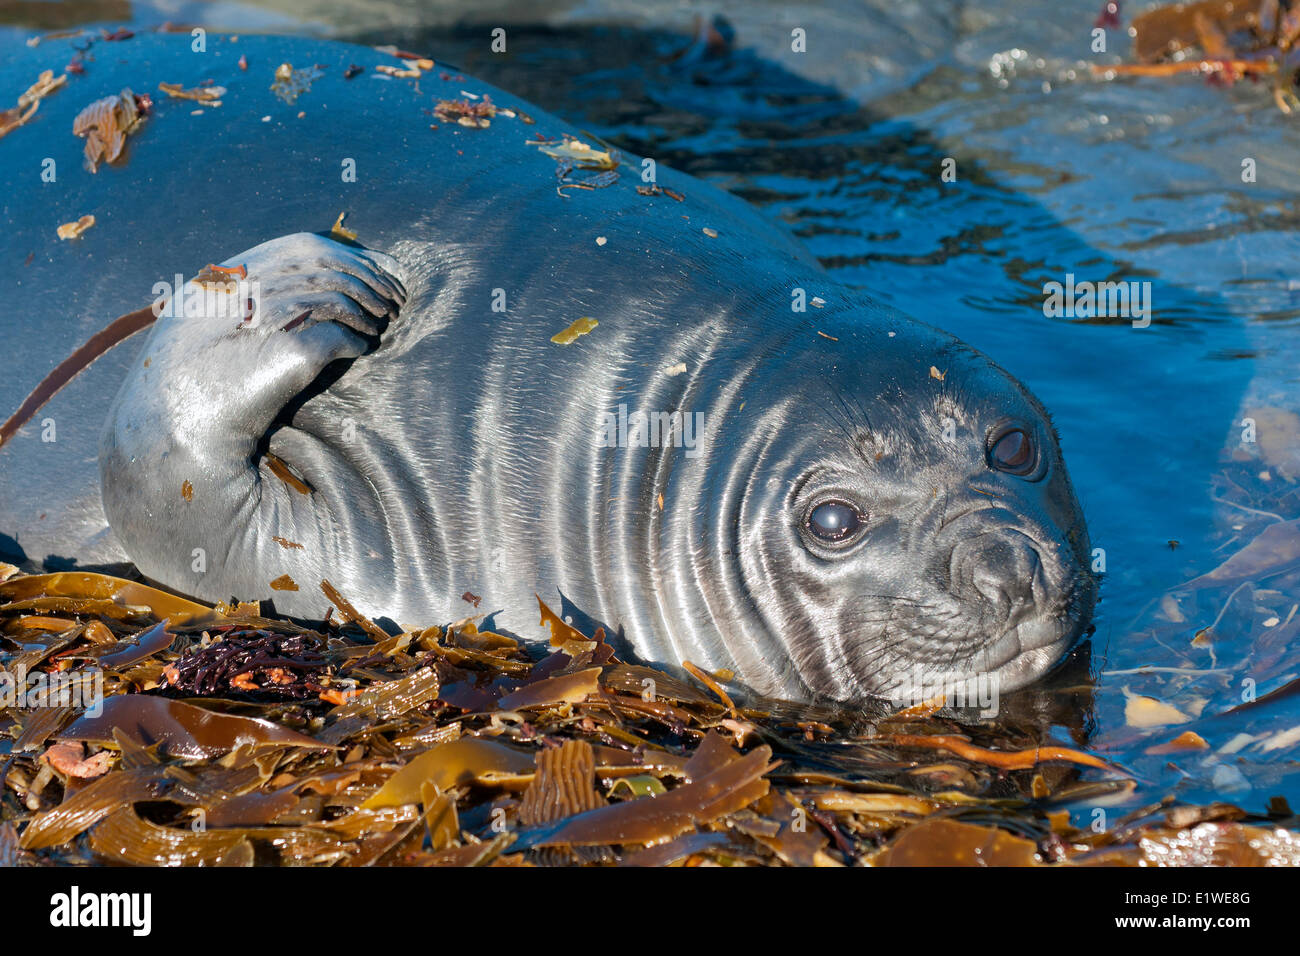 Southern elephant seal (Mirounga leonina) pup, Falkland Islands, Southern Atlantic Stock Photo